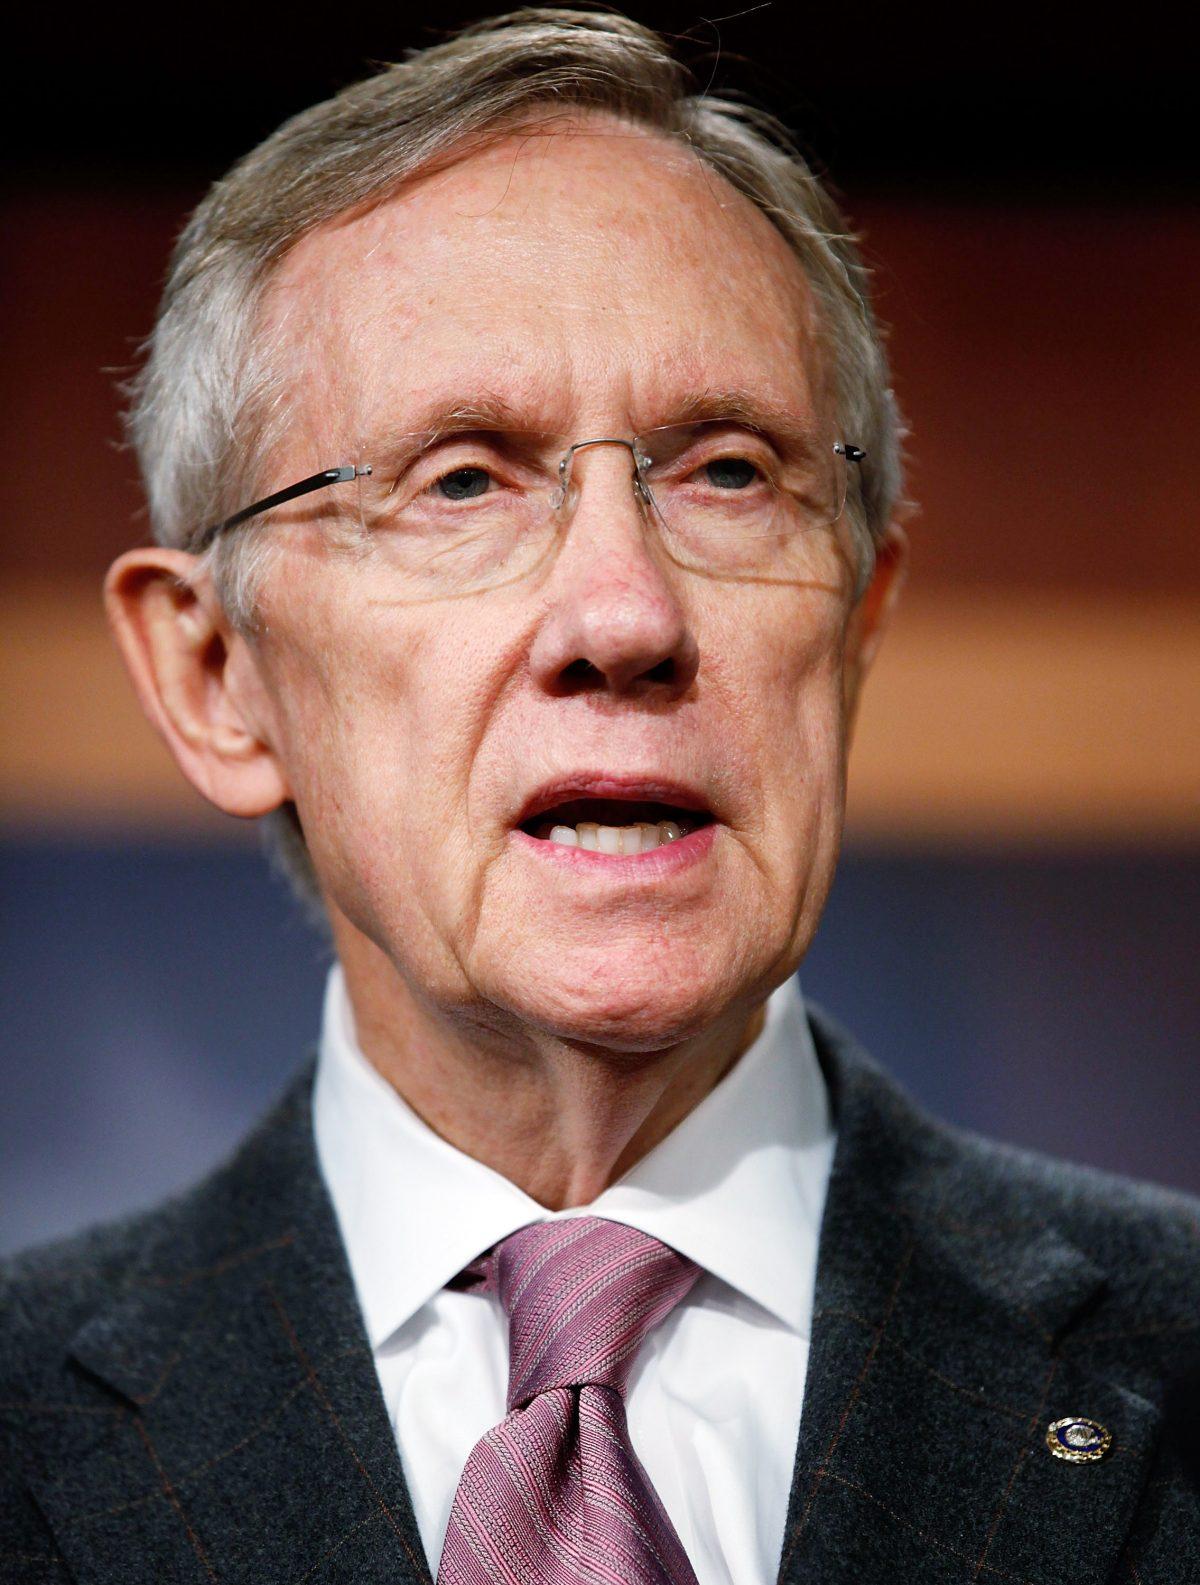 Senate Majority Leader Harry Reid. (Chip Somodevilla/Getty Images)